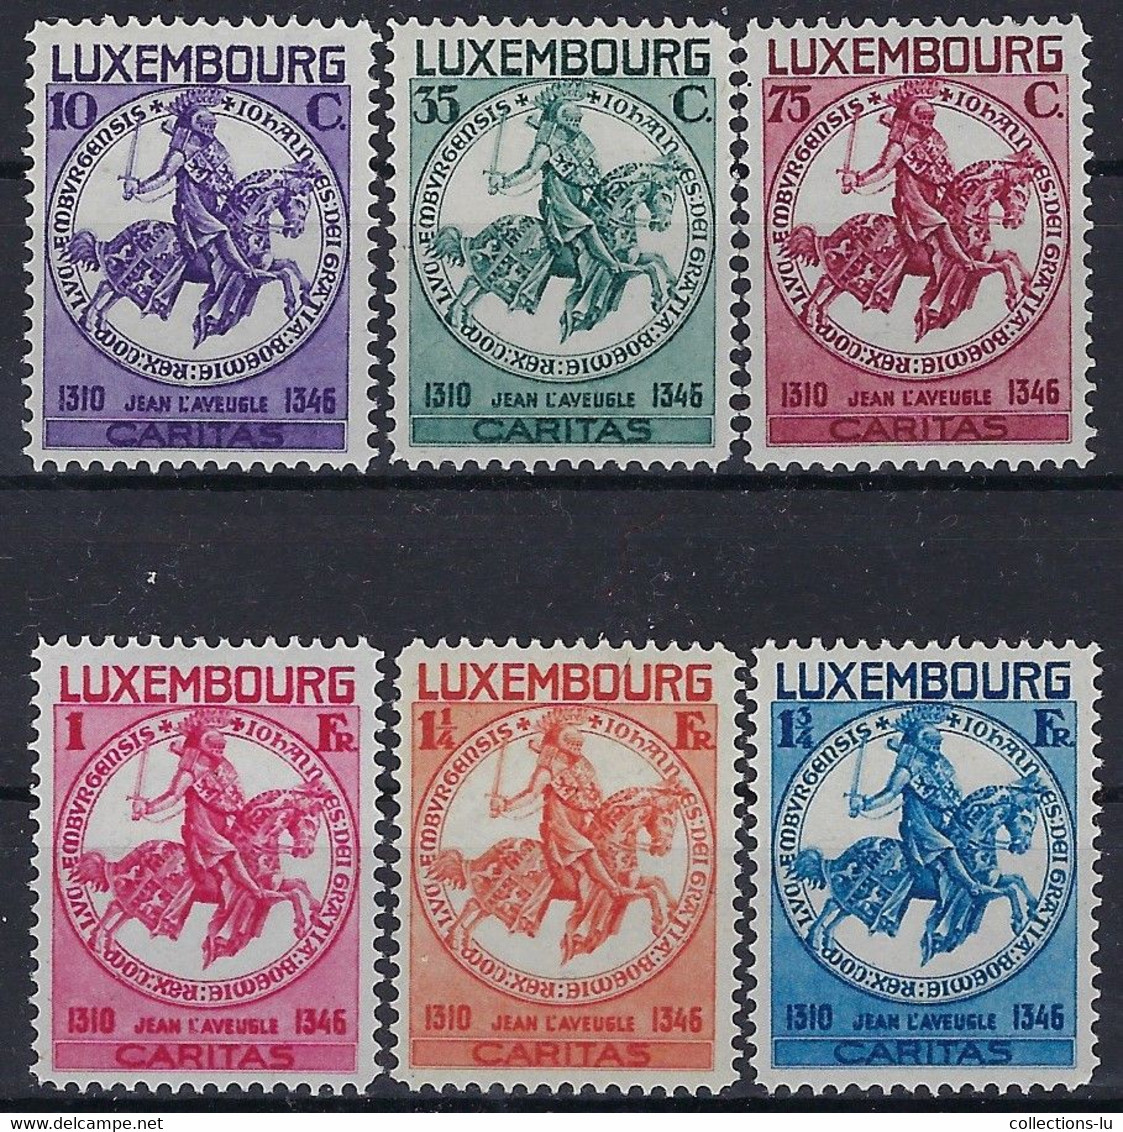 Luxembourg - Luxemburg - Timbres  1934  CARITAS   Jean L'Aveugle  Série MH*  VC.140,- - Usati